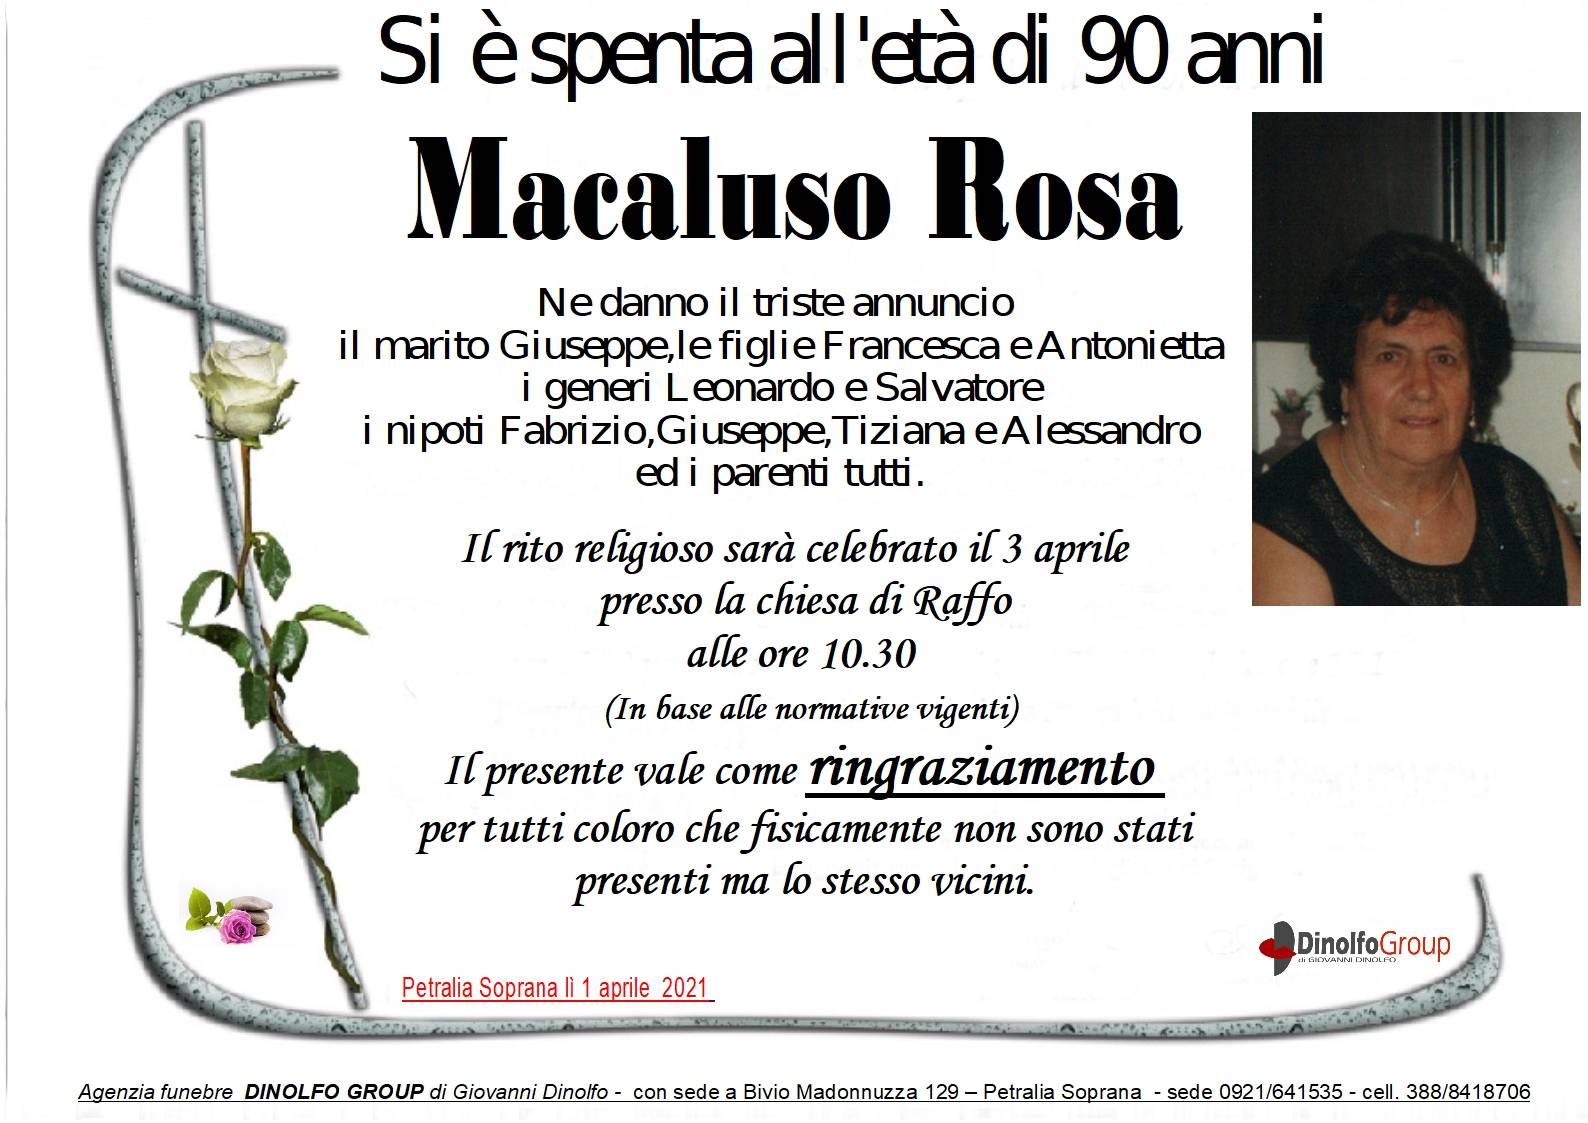 Rosa Macaluso